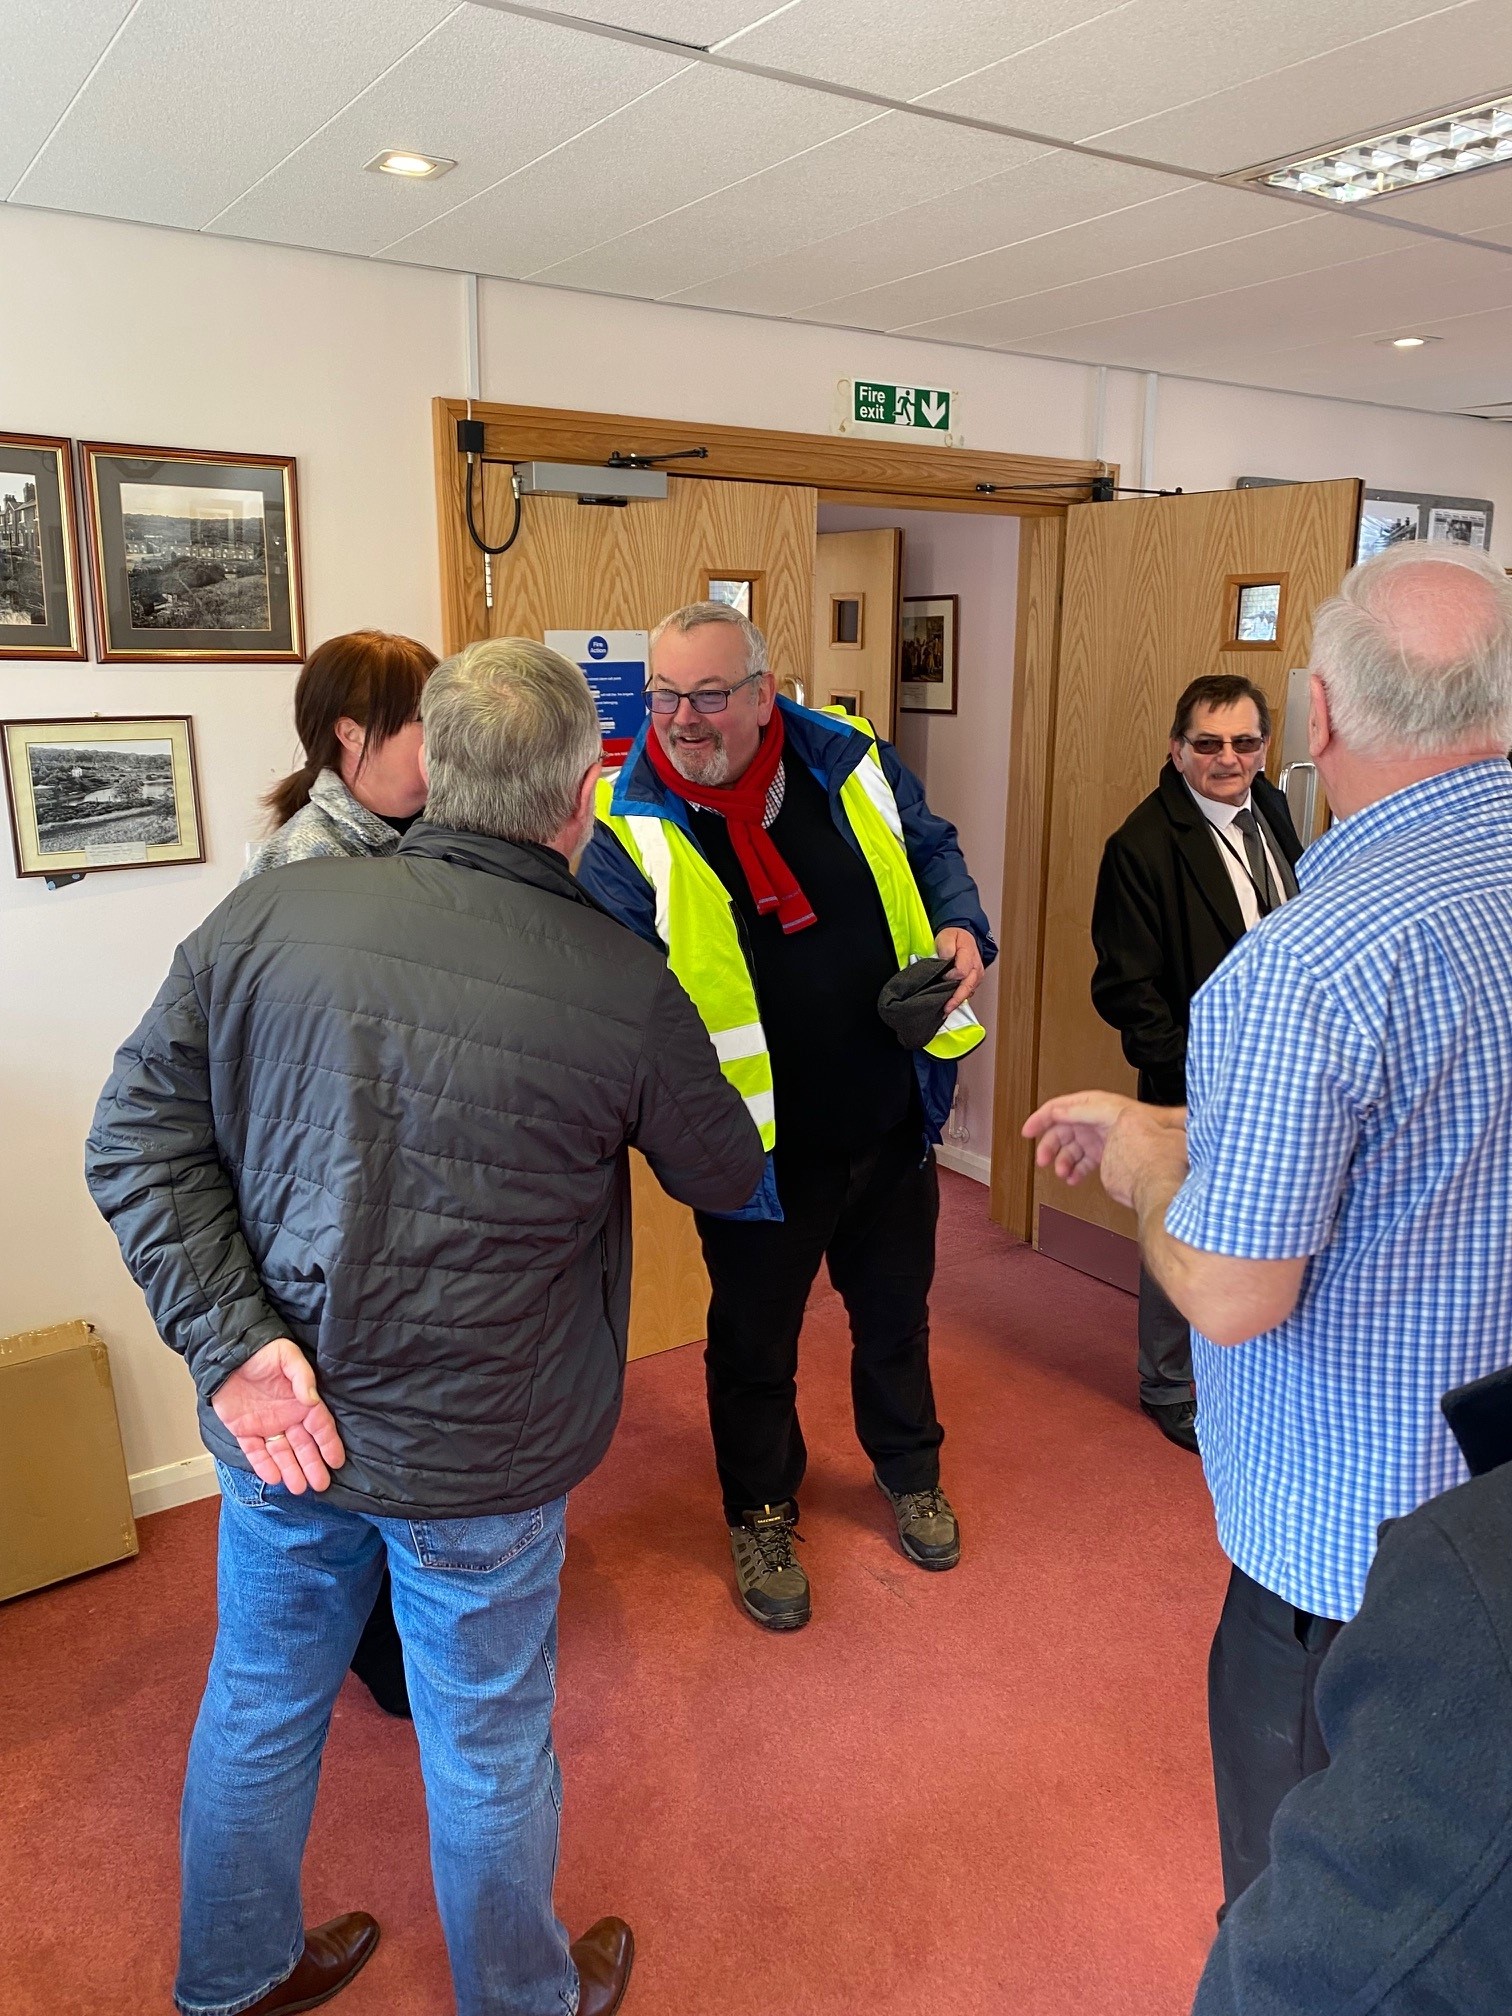 Leader of the Council visits Ecclesfield Parish Council